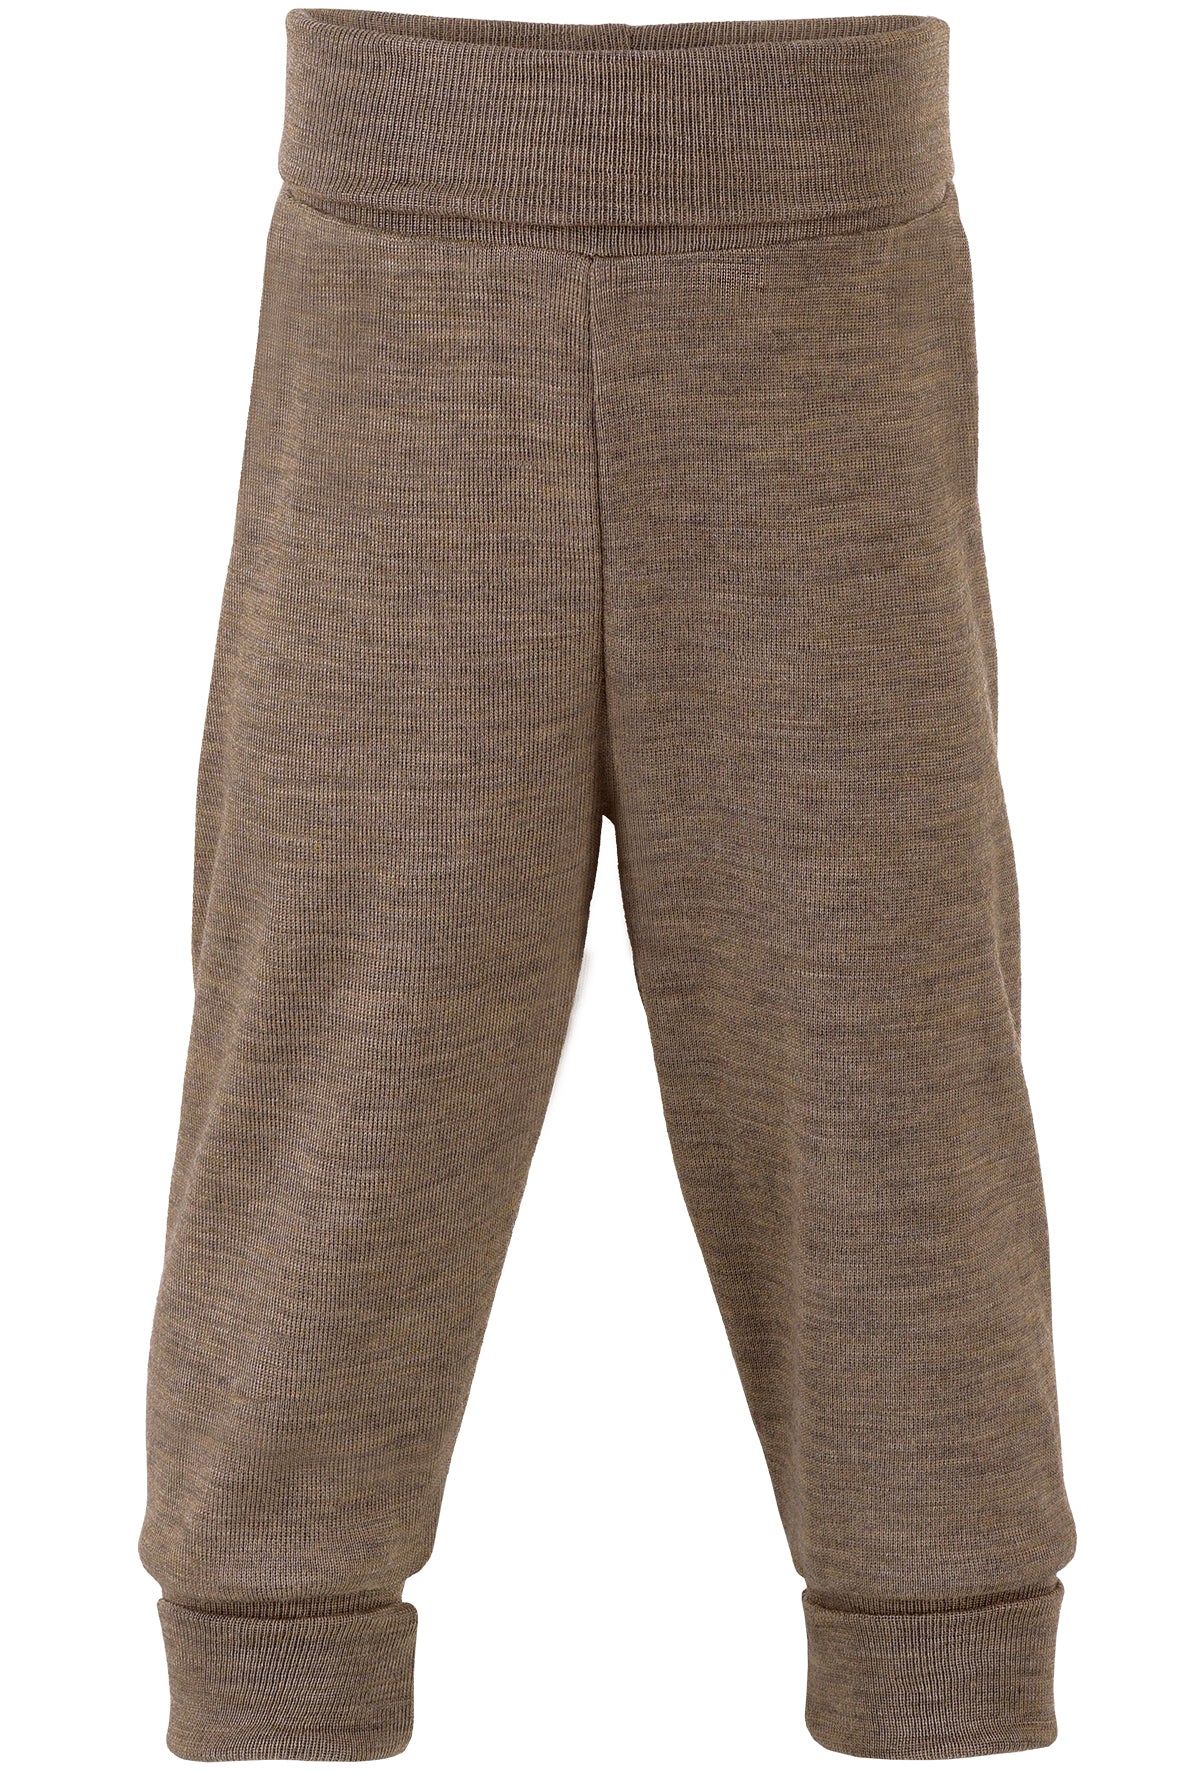 ENGEL Baby Wool Fleece Pants for Boys and Girls, 100% Organic Merino Wool,  NB-1Y